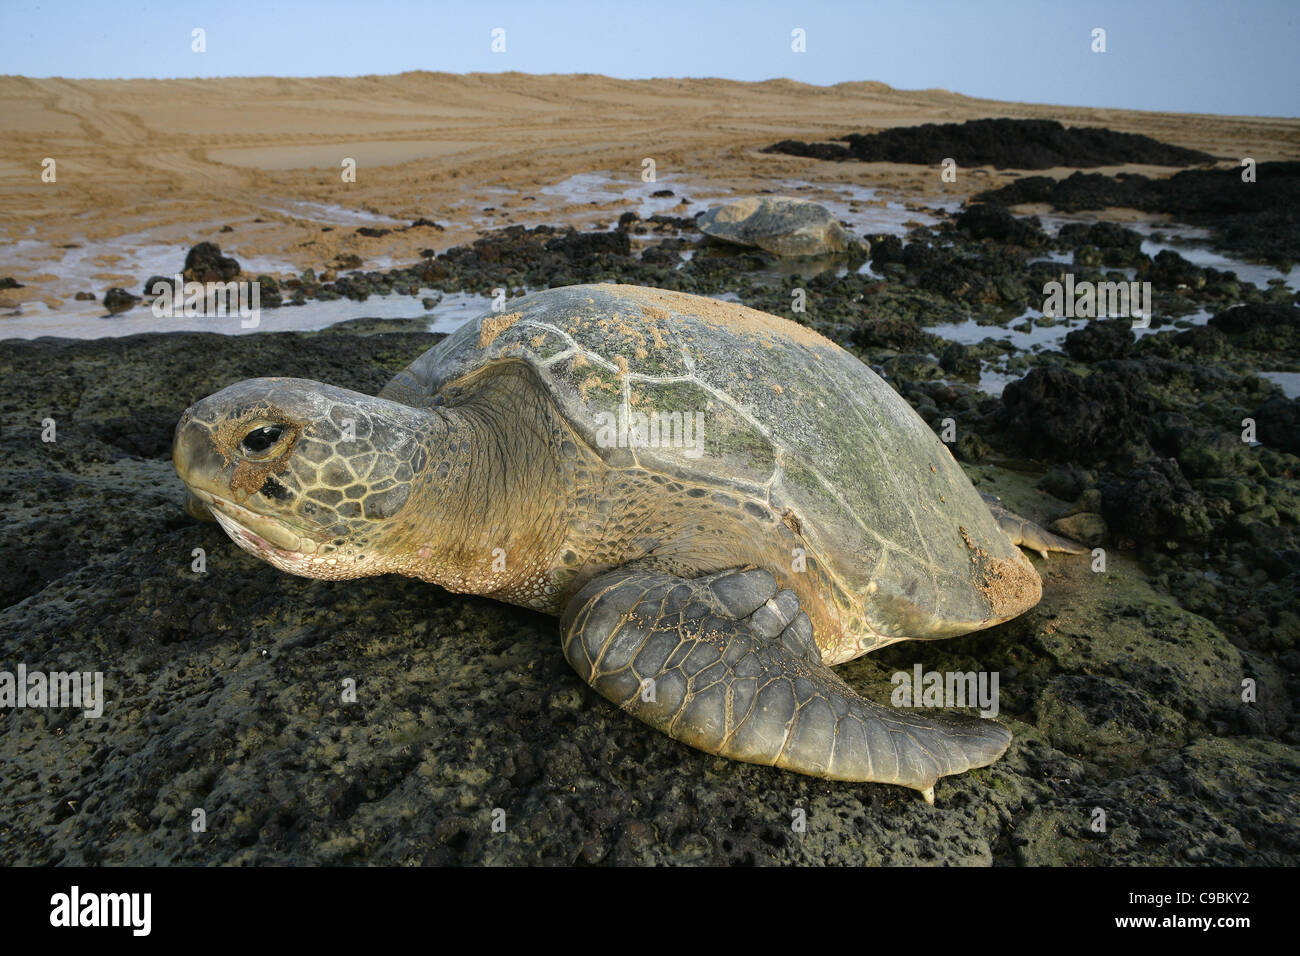 Africa, Guinea-Bissau, Green sea turtle on stone Stock Photo